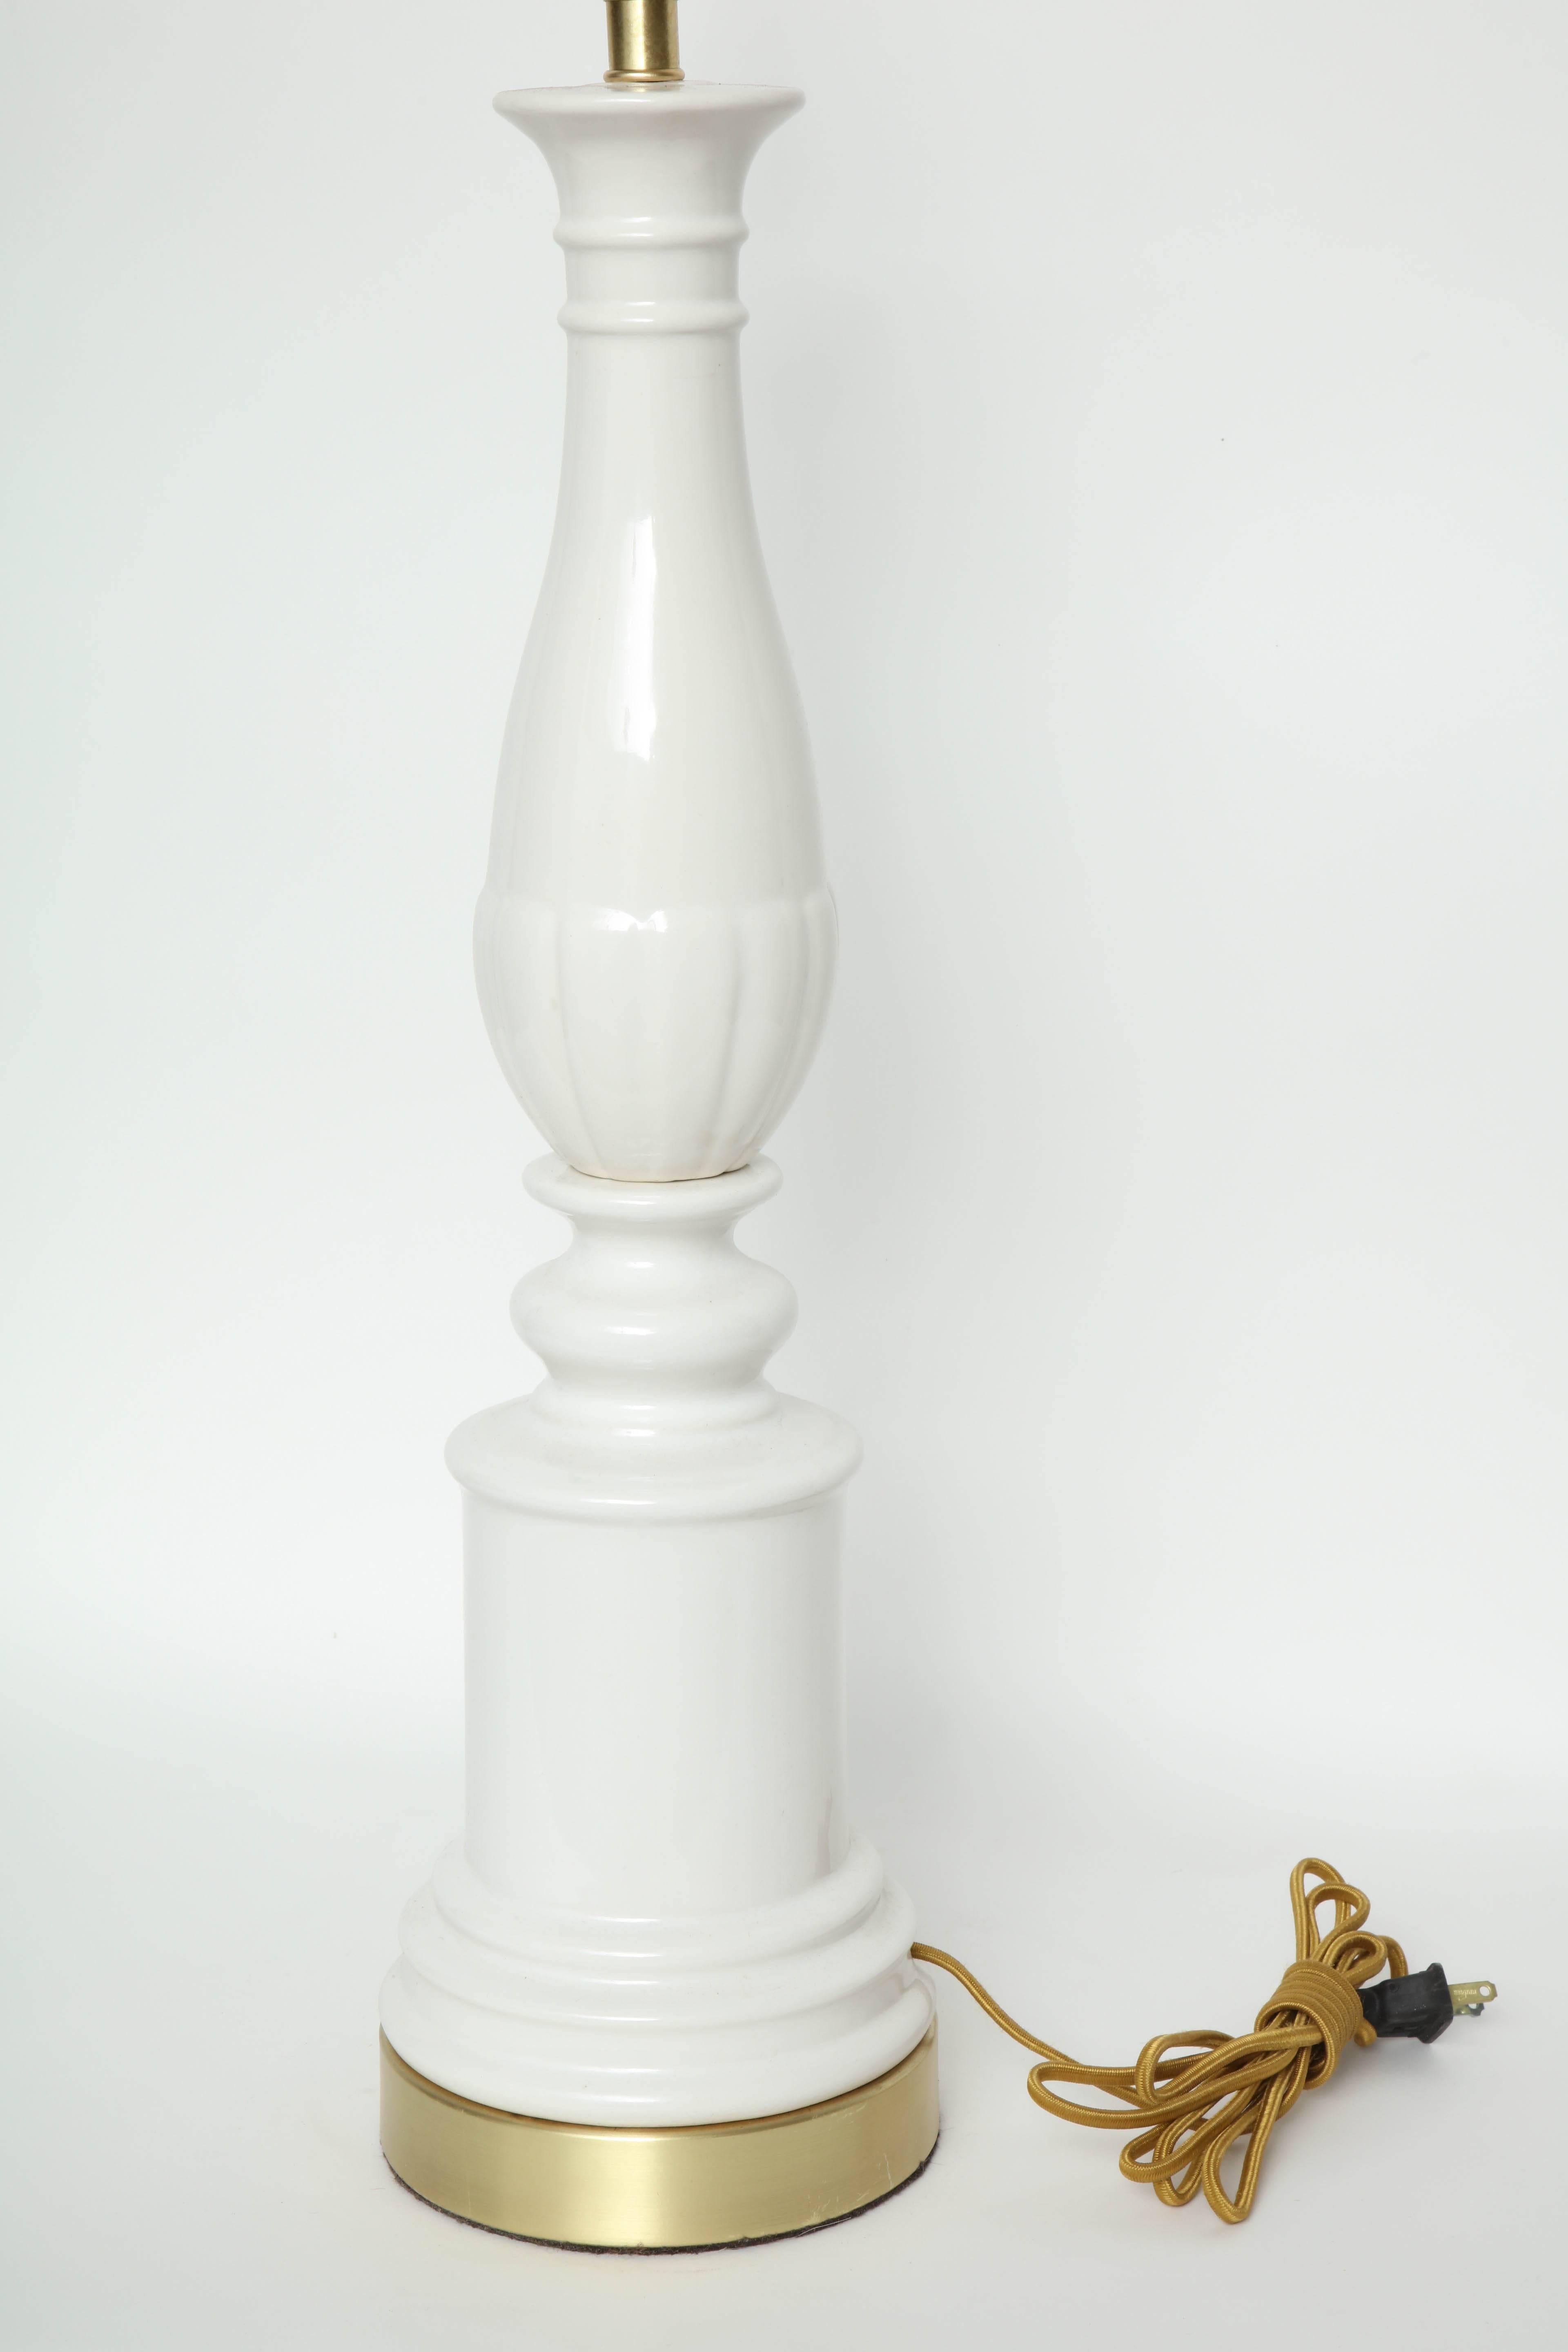 American Blanc De Chine Baluster Porcelain Lamps For Sale